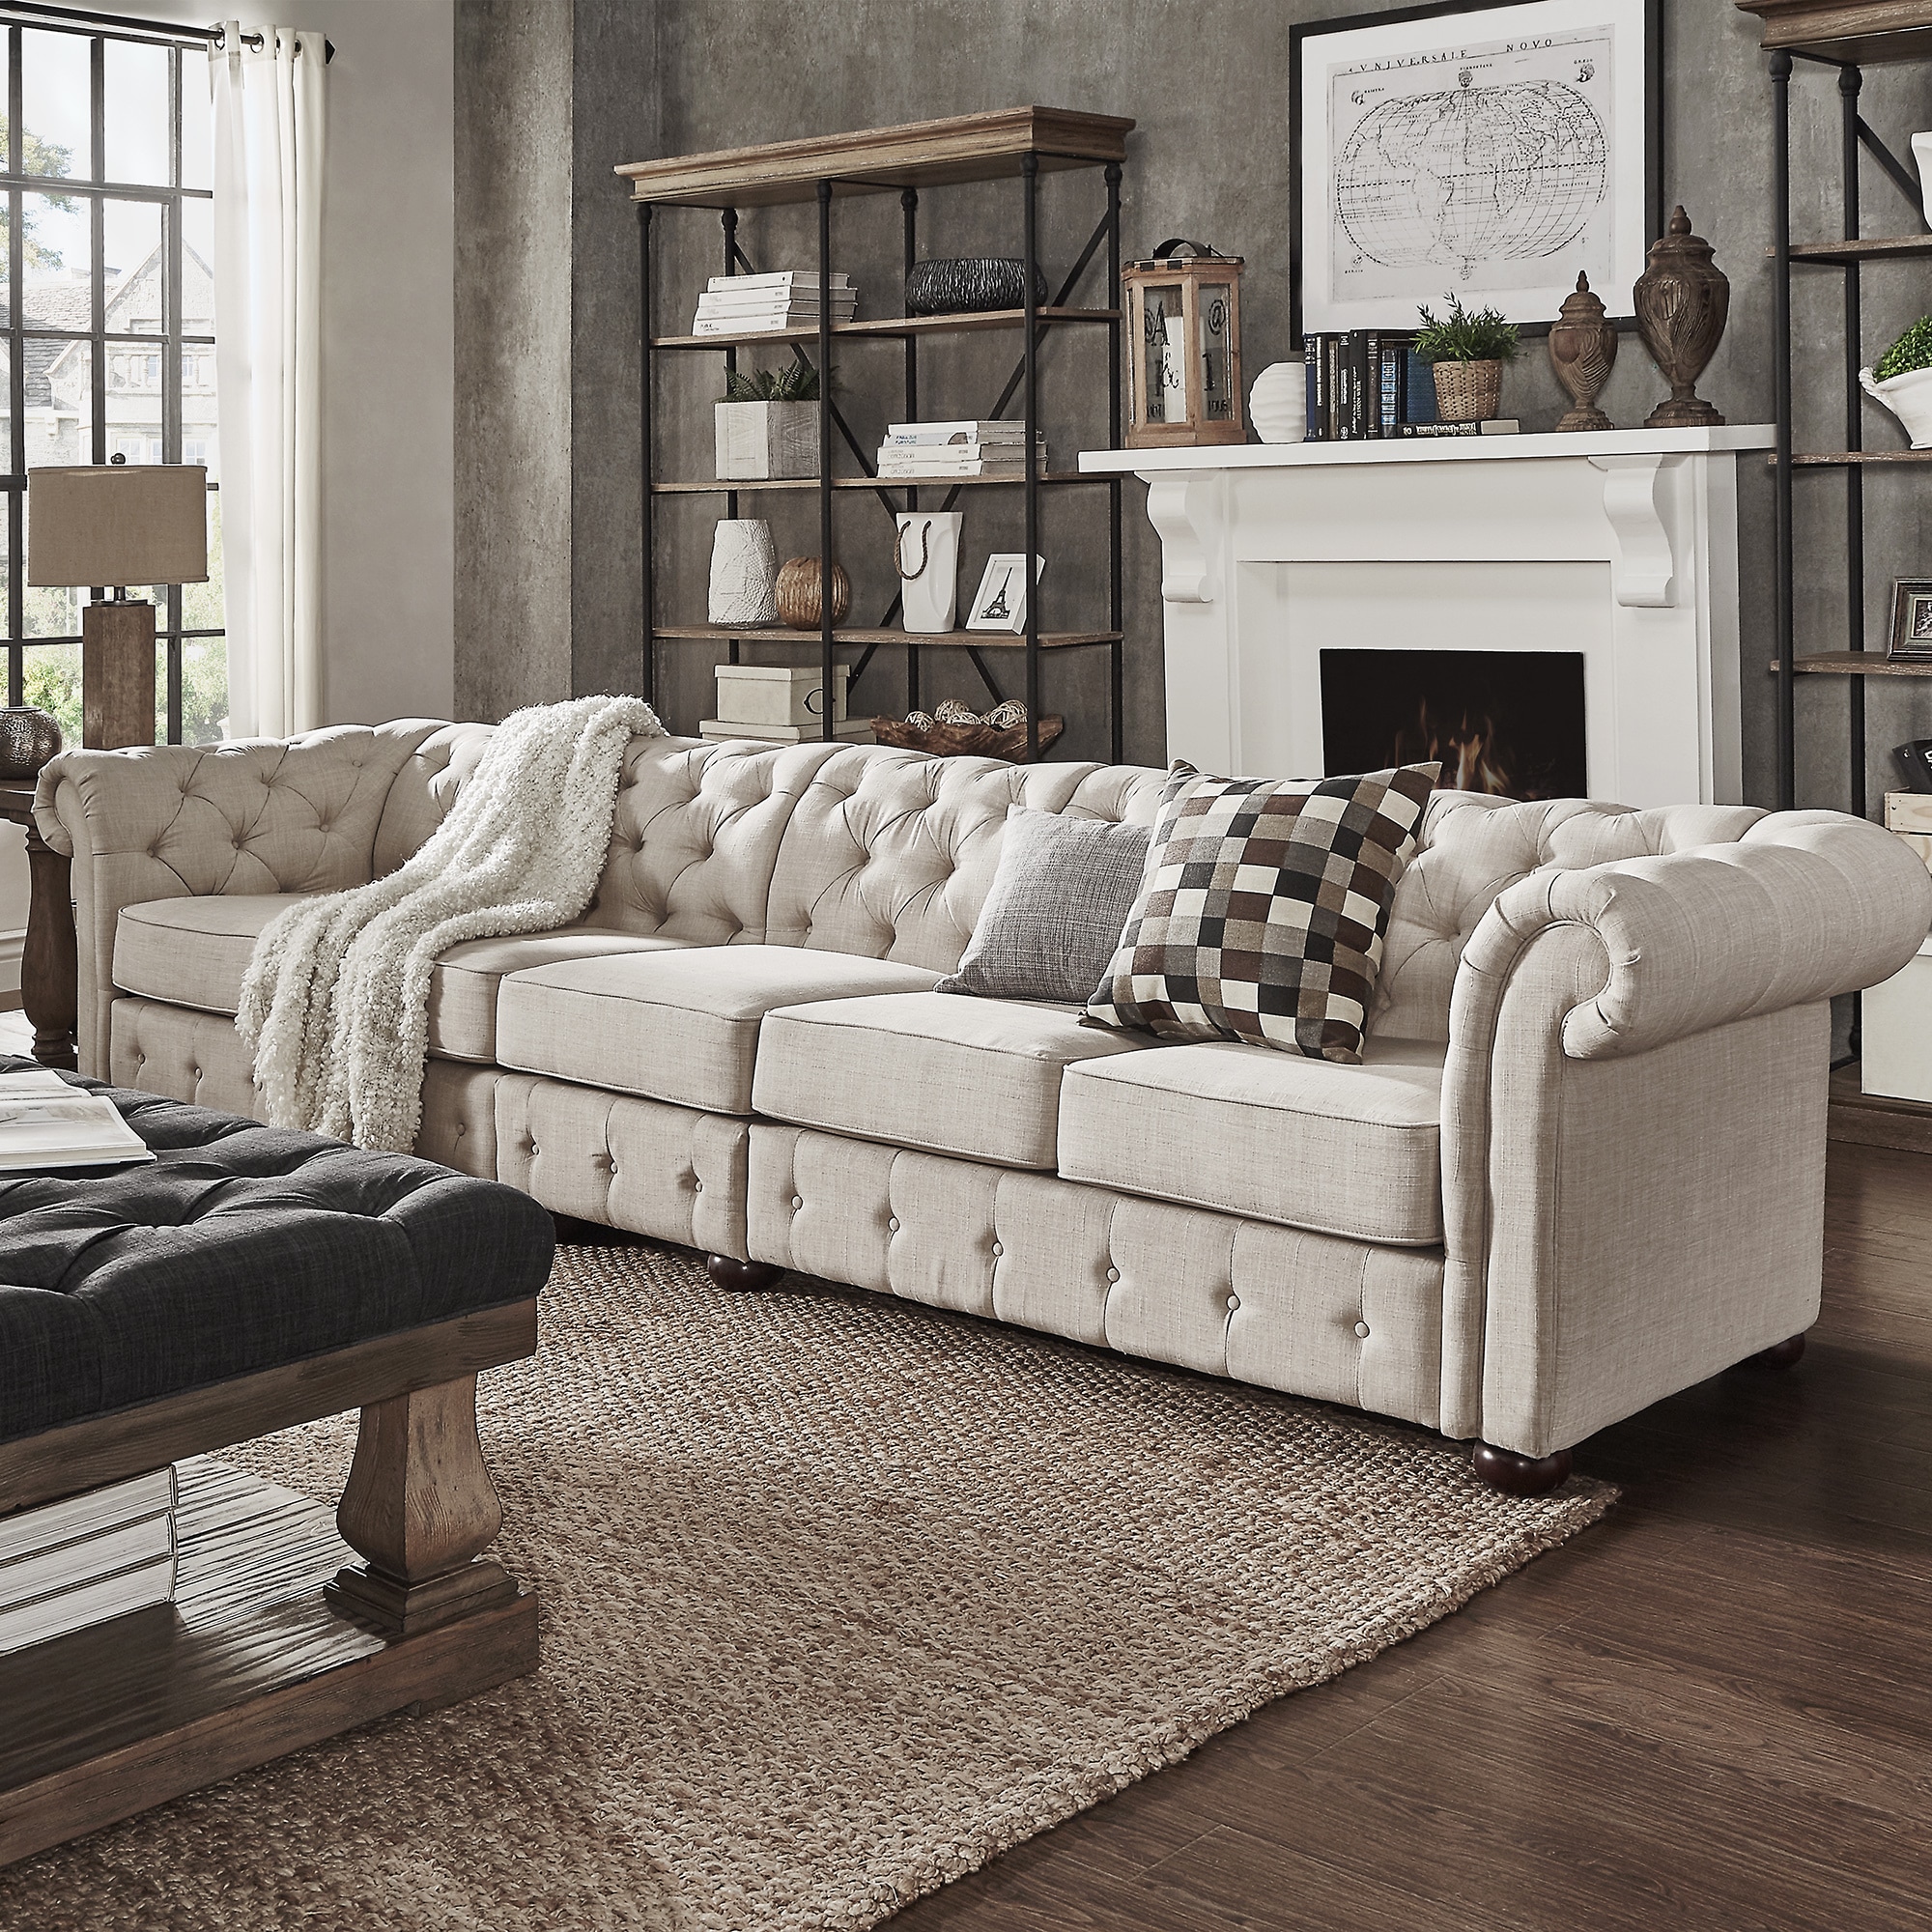 iNSPIRE Q Artisan Knightsbridge Beige Linen Oversize Extra Long Tufted Chesterfield Modular Sofa